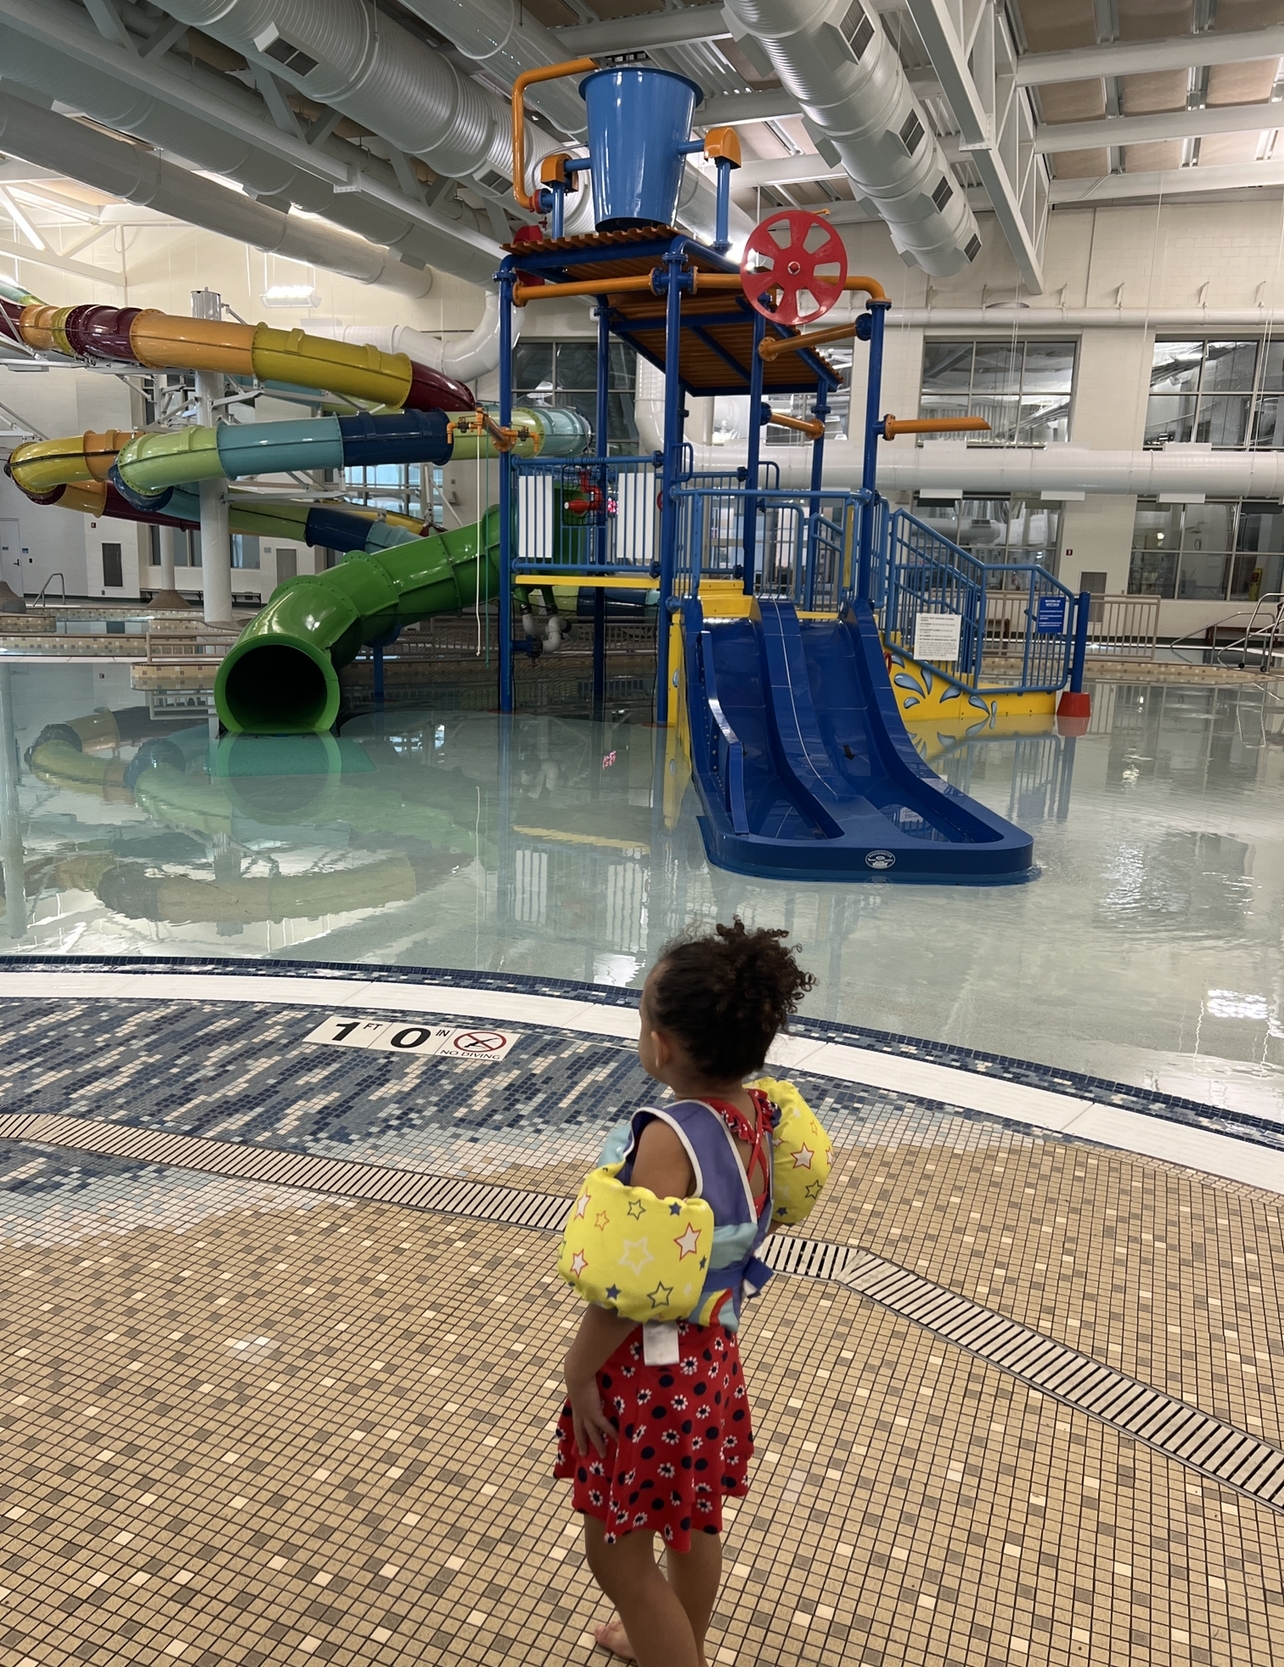 Make a Splash: Exploring the Aquatic Wonderland at Westerville Community Center